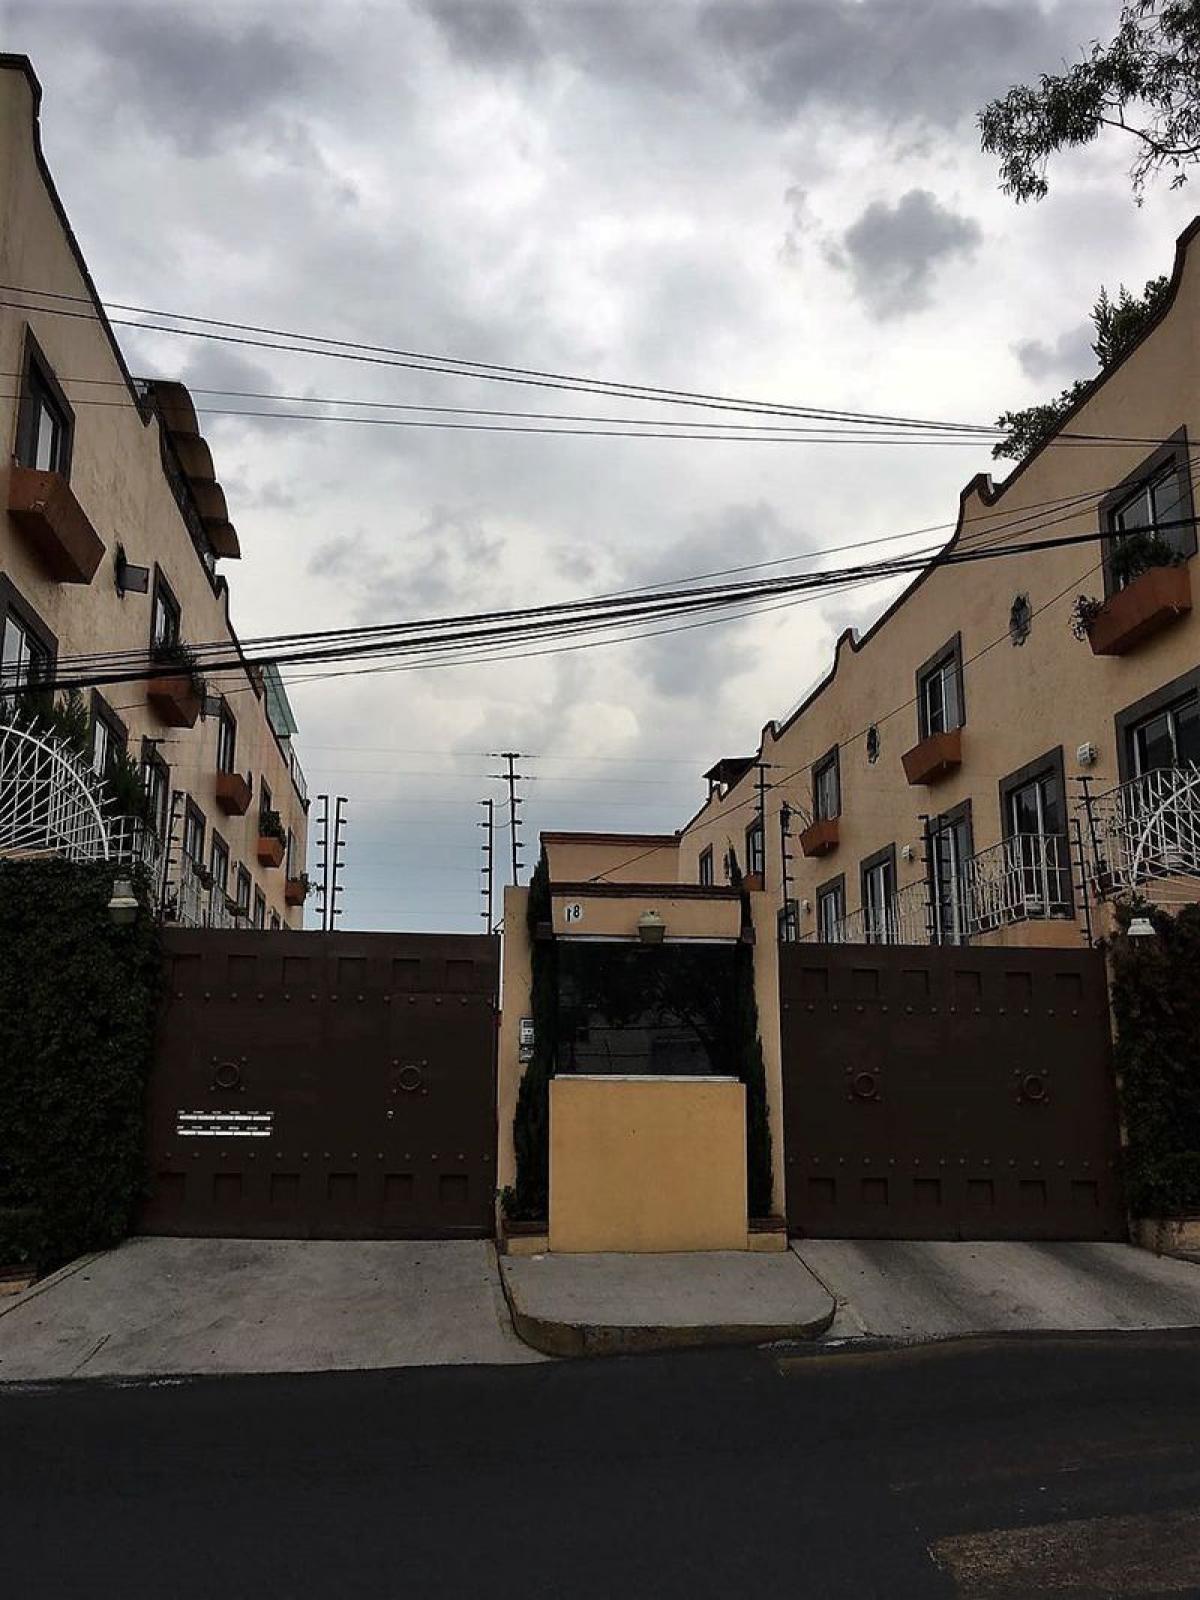 Picture of Home For Sale in Distrito Federal, Mexico City, Mexico